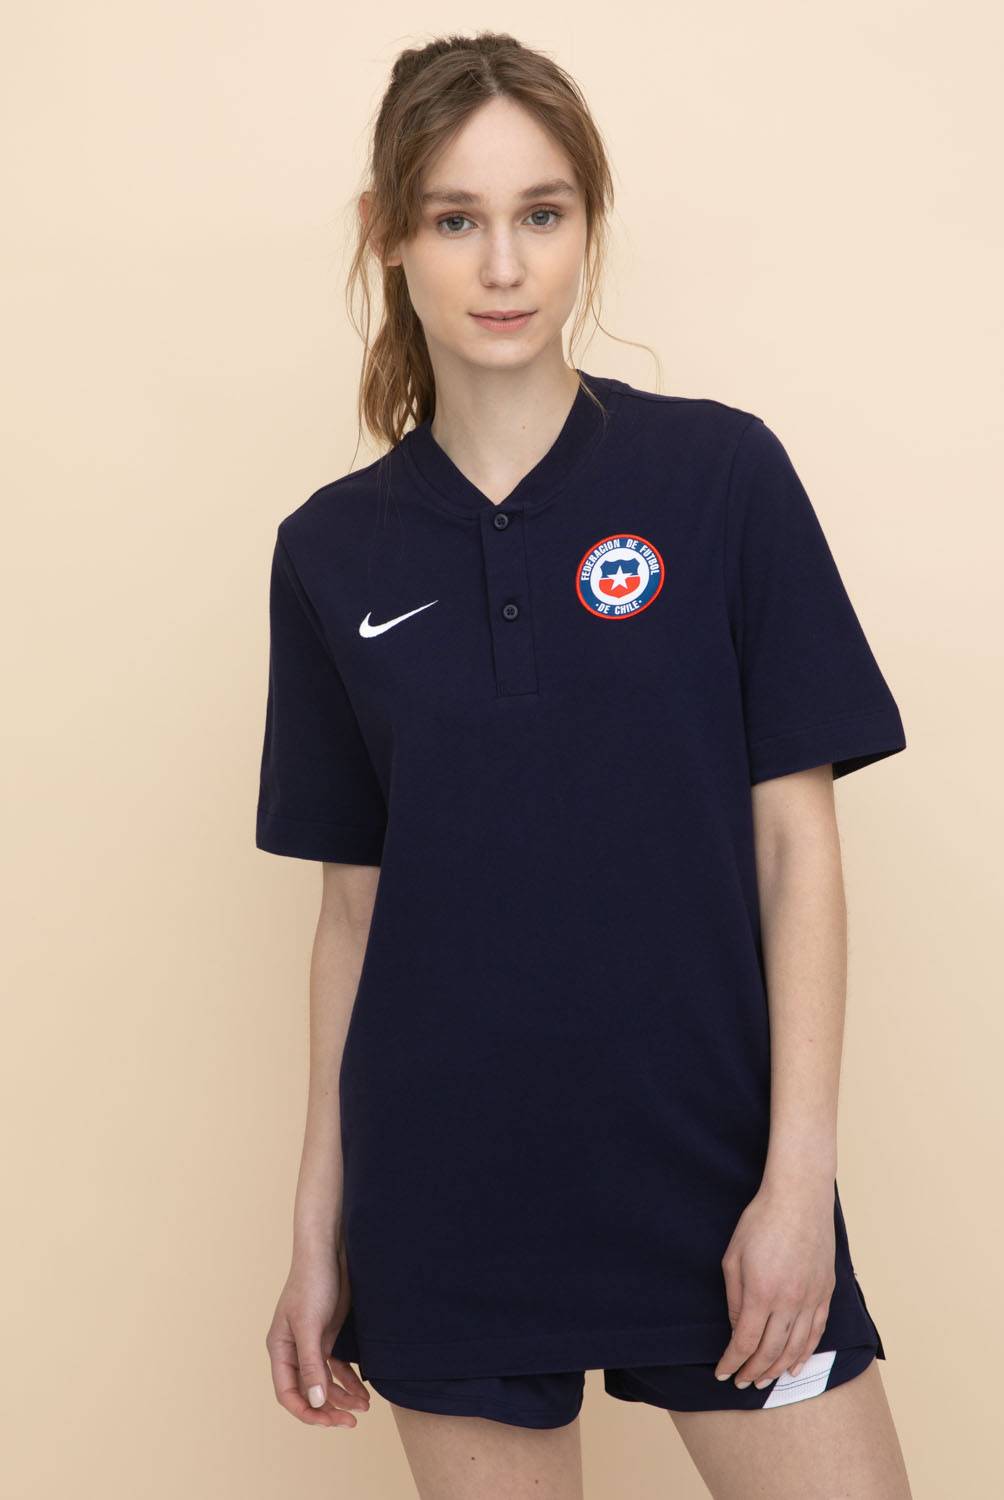 NIKE - Camiseta Polo Chile Mujer Fútbol Prematch